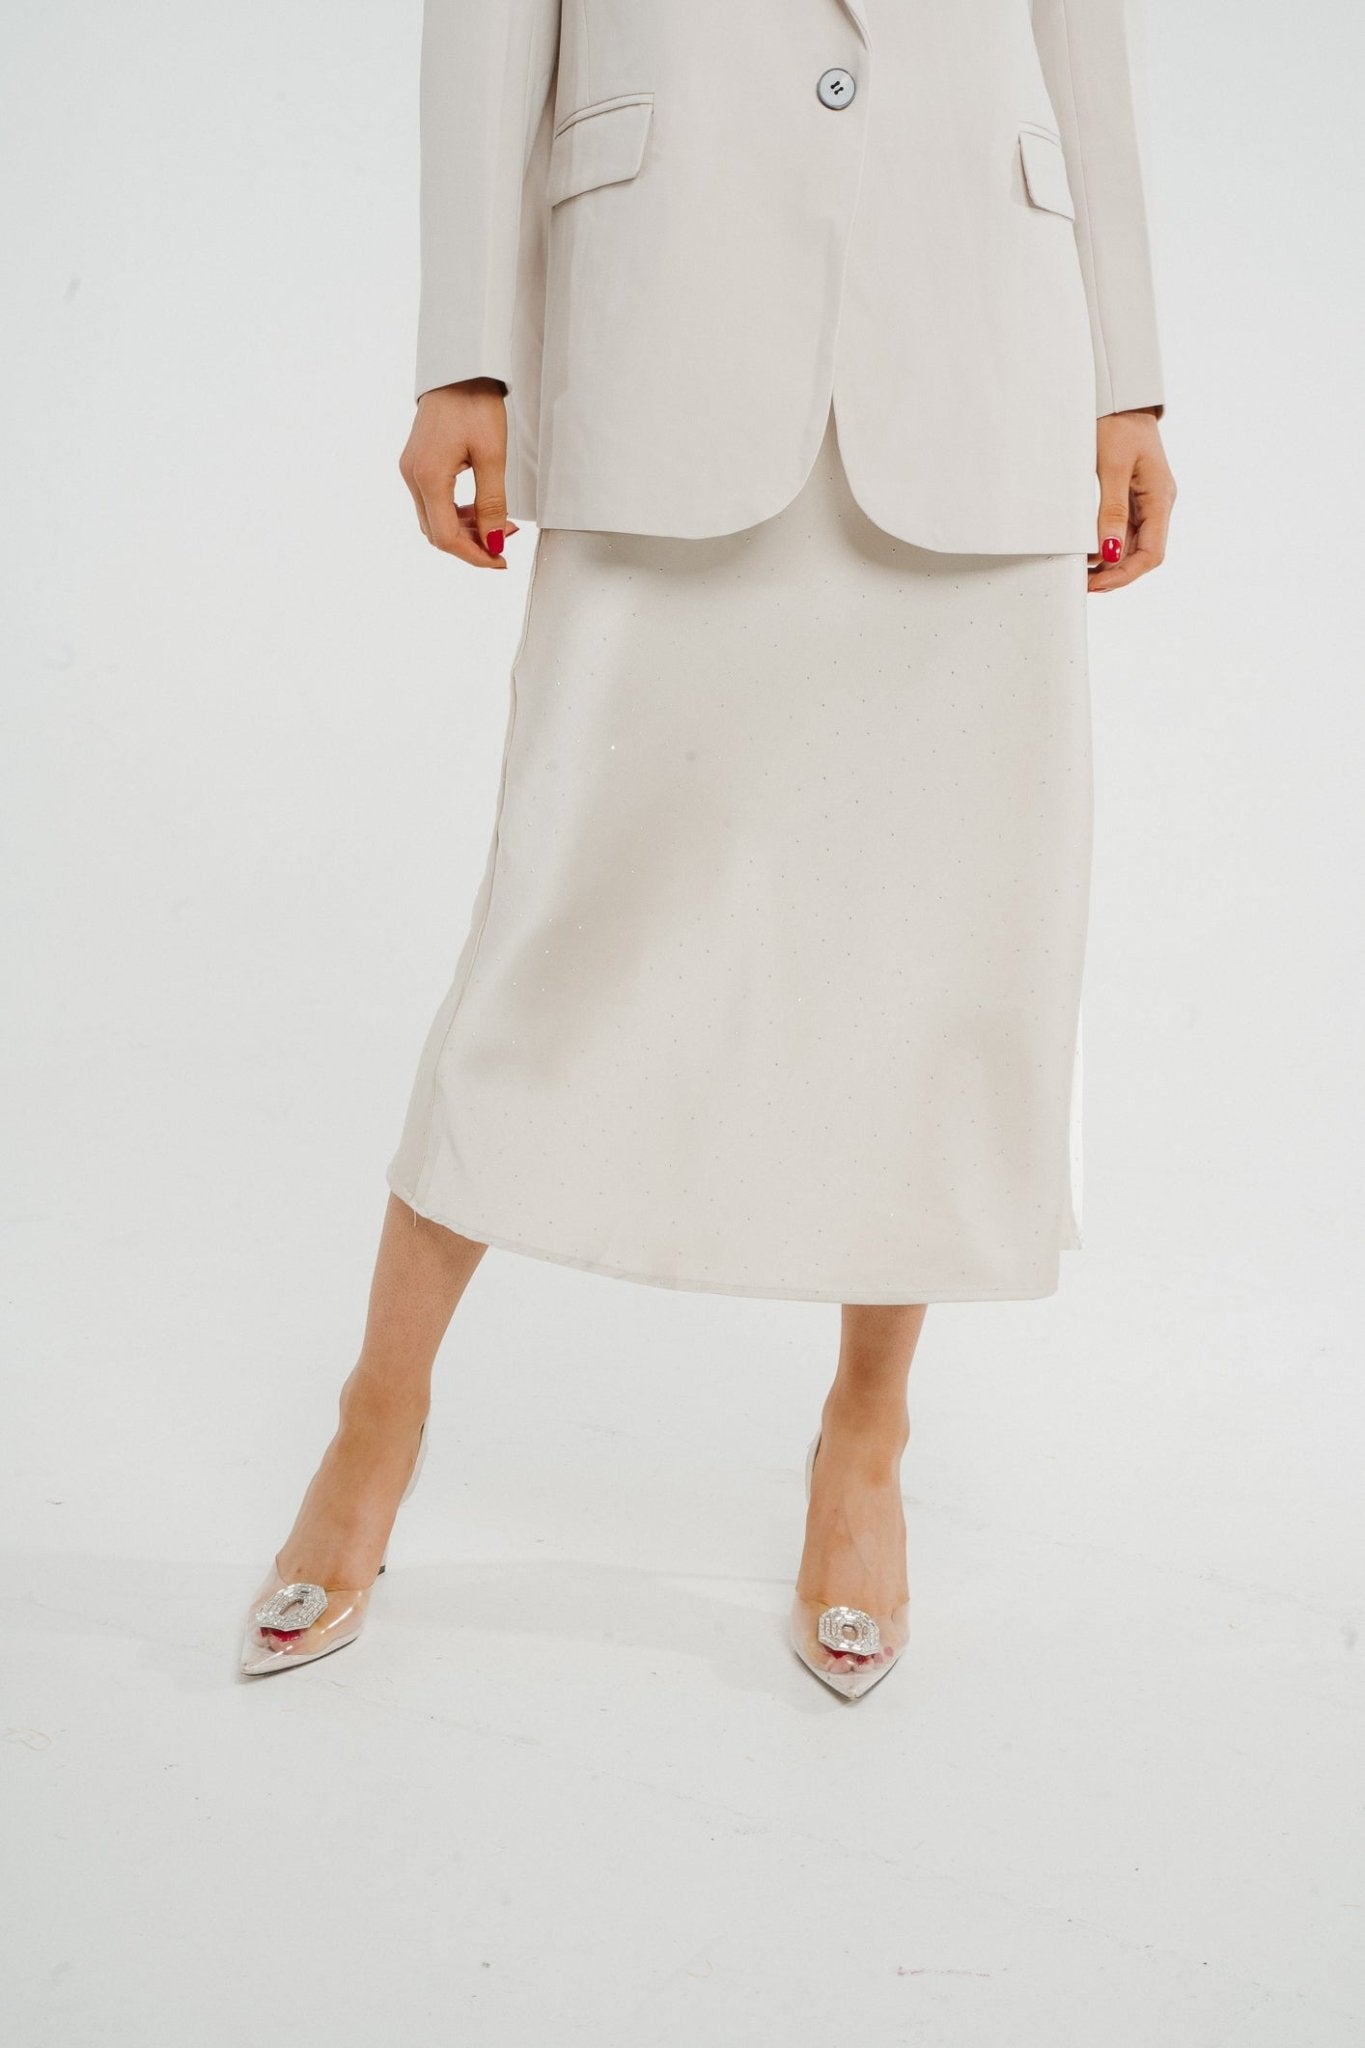 Kate Embellished Satin Midi Skirt In Cream - The Walk in Wardrobe